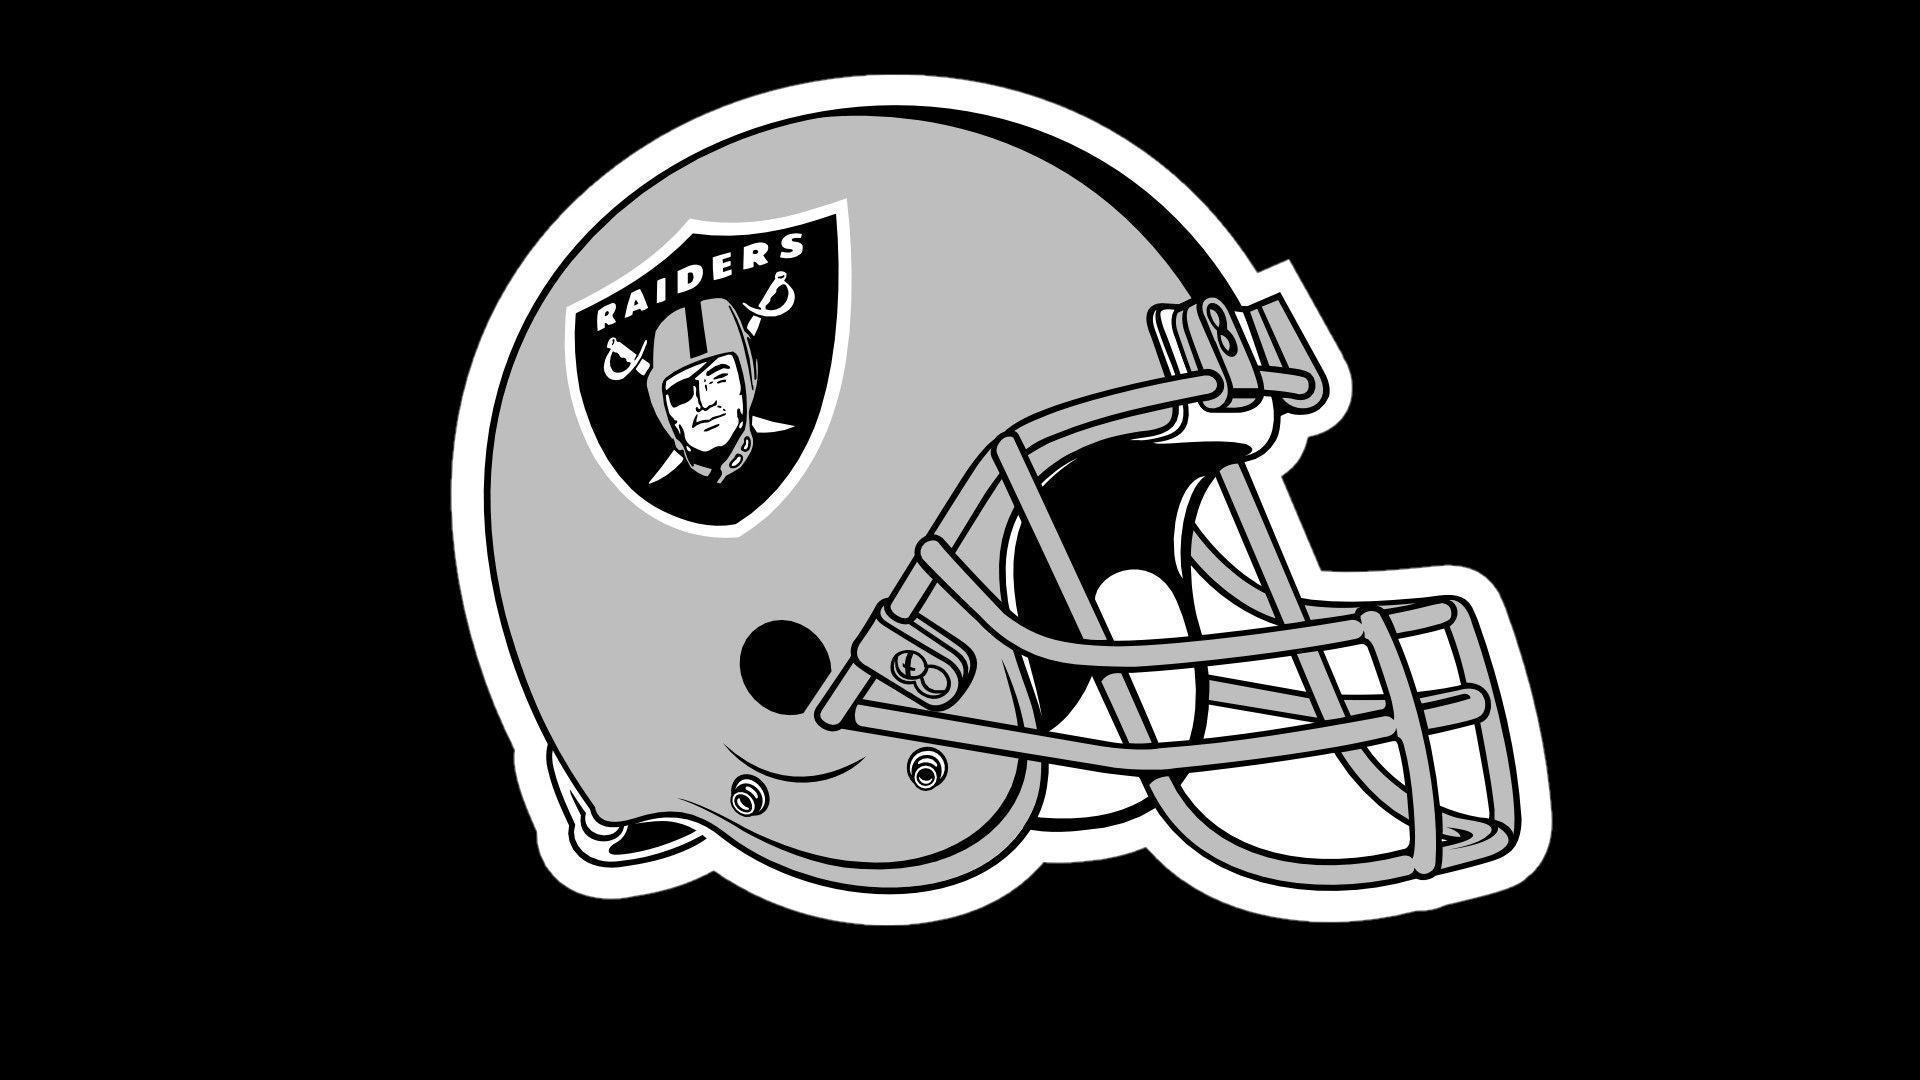 Oakland Raiders Logo Wallpaper